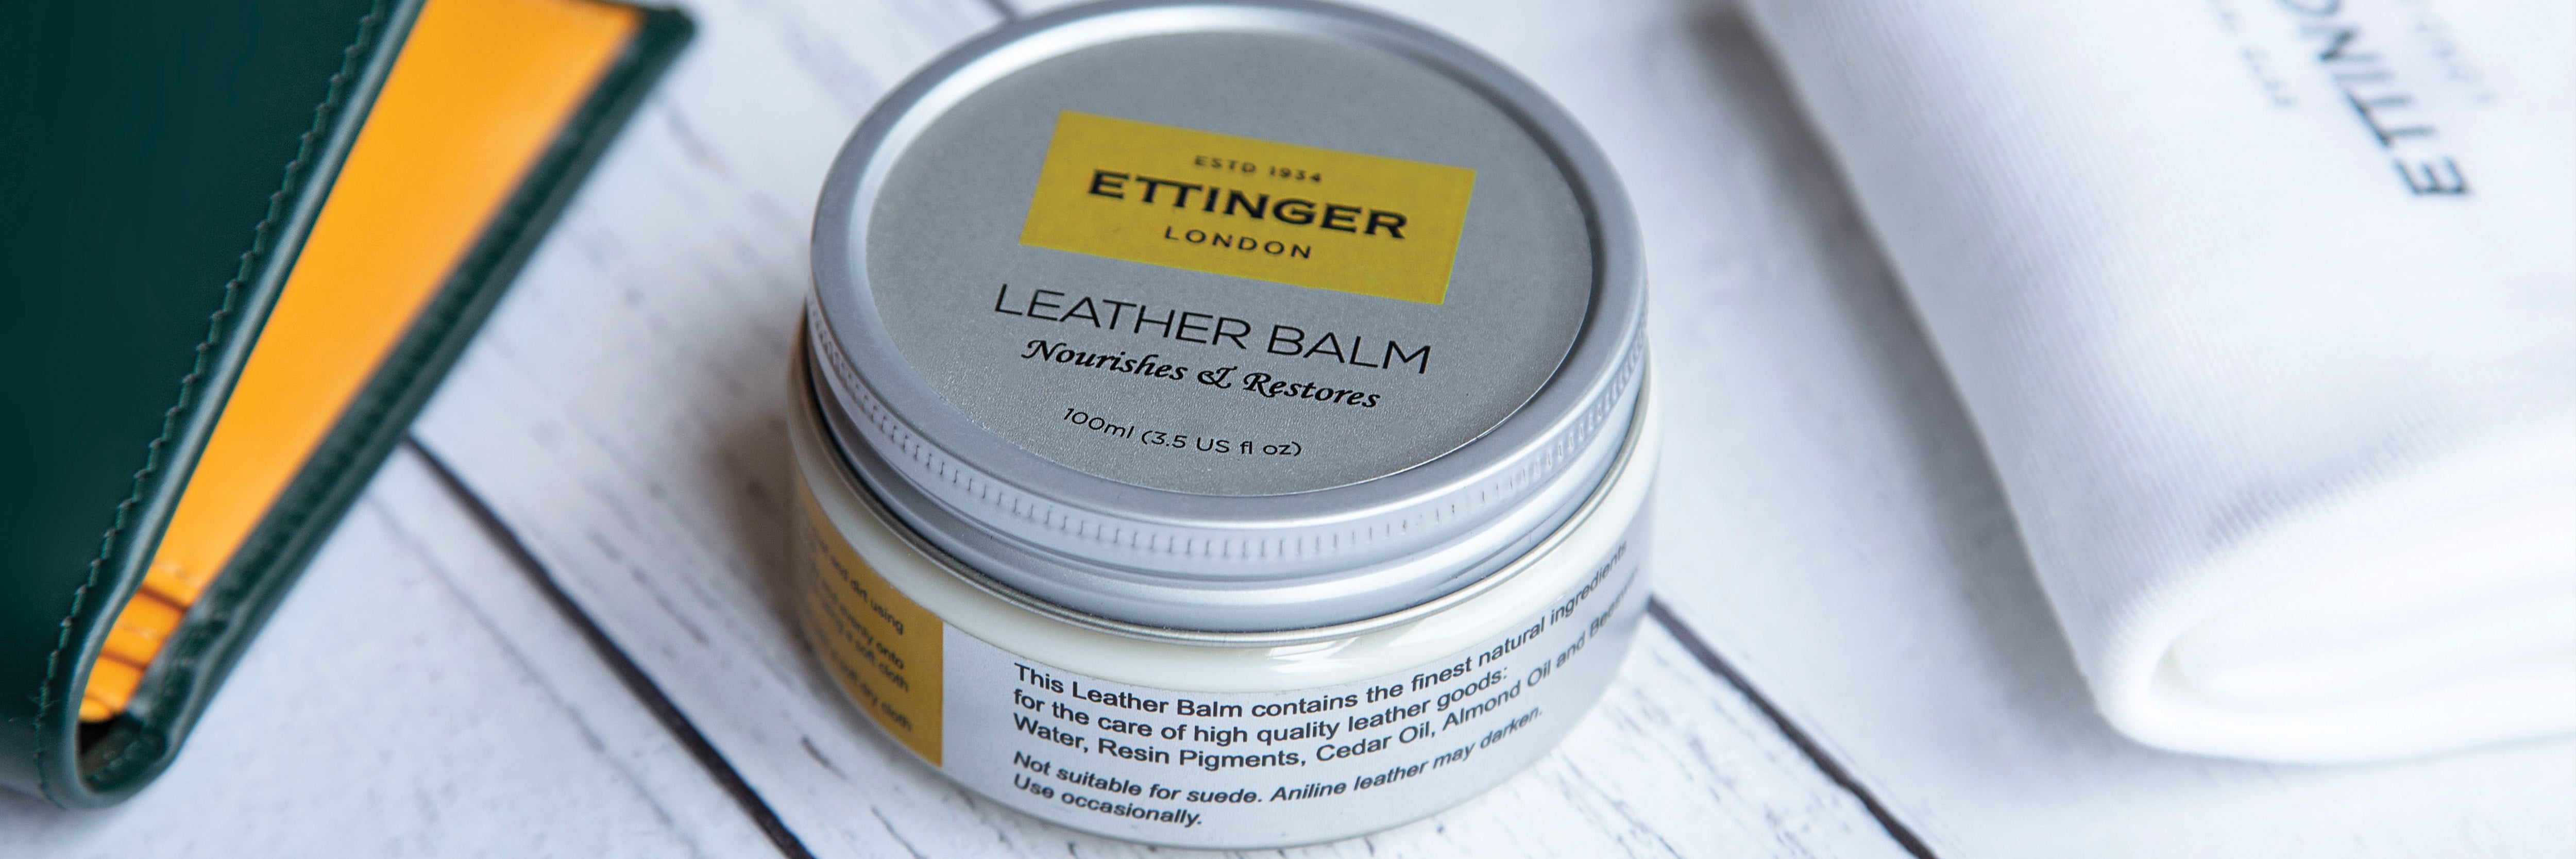 Products – Ettinger London